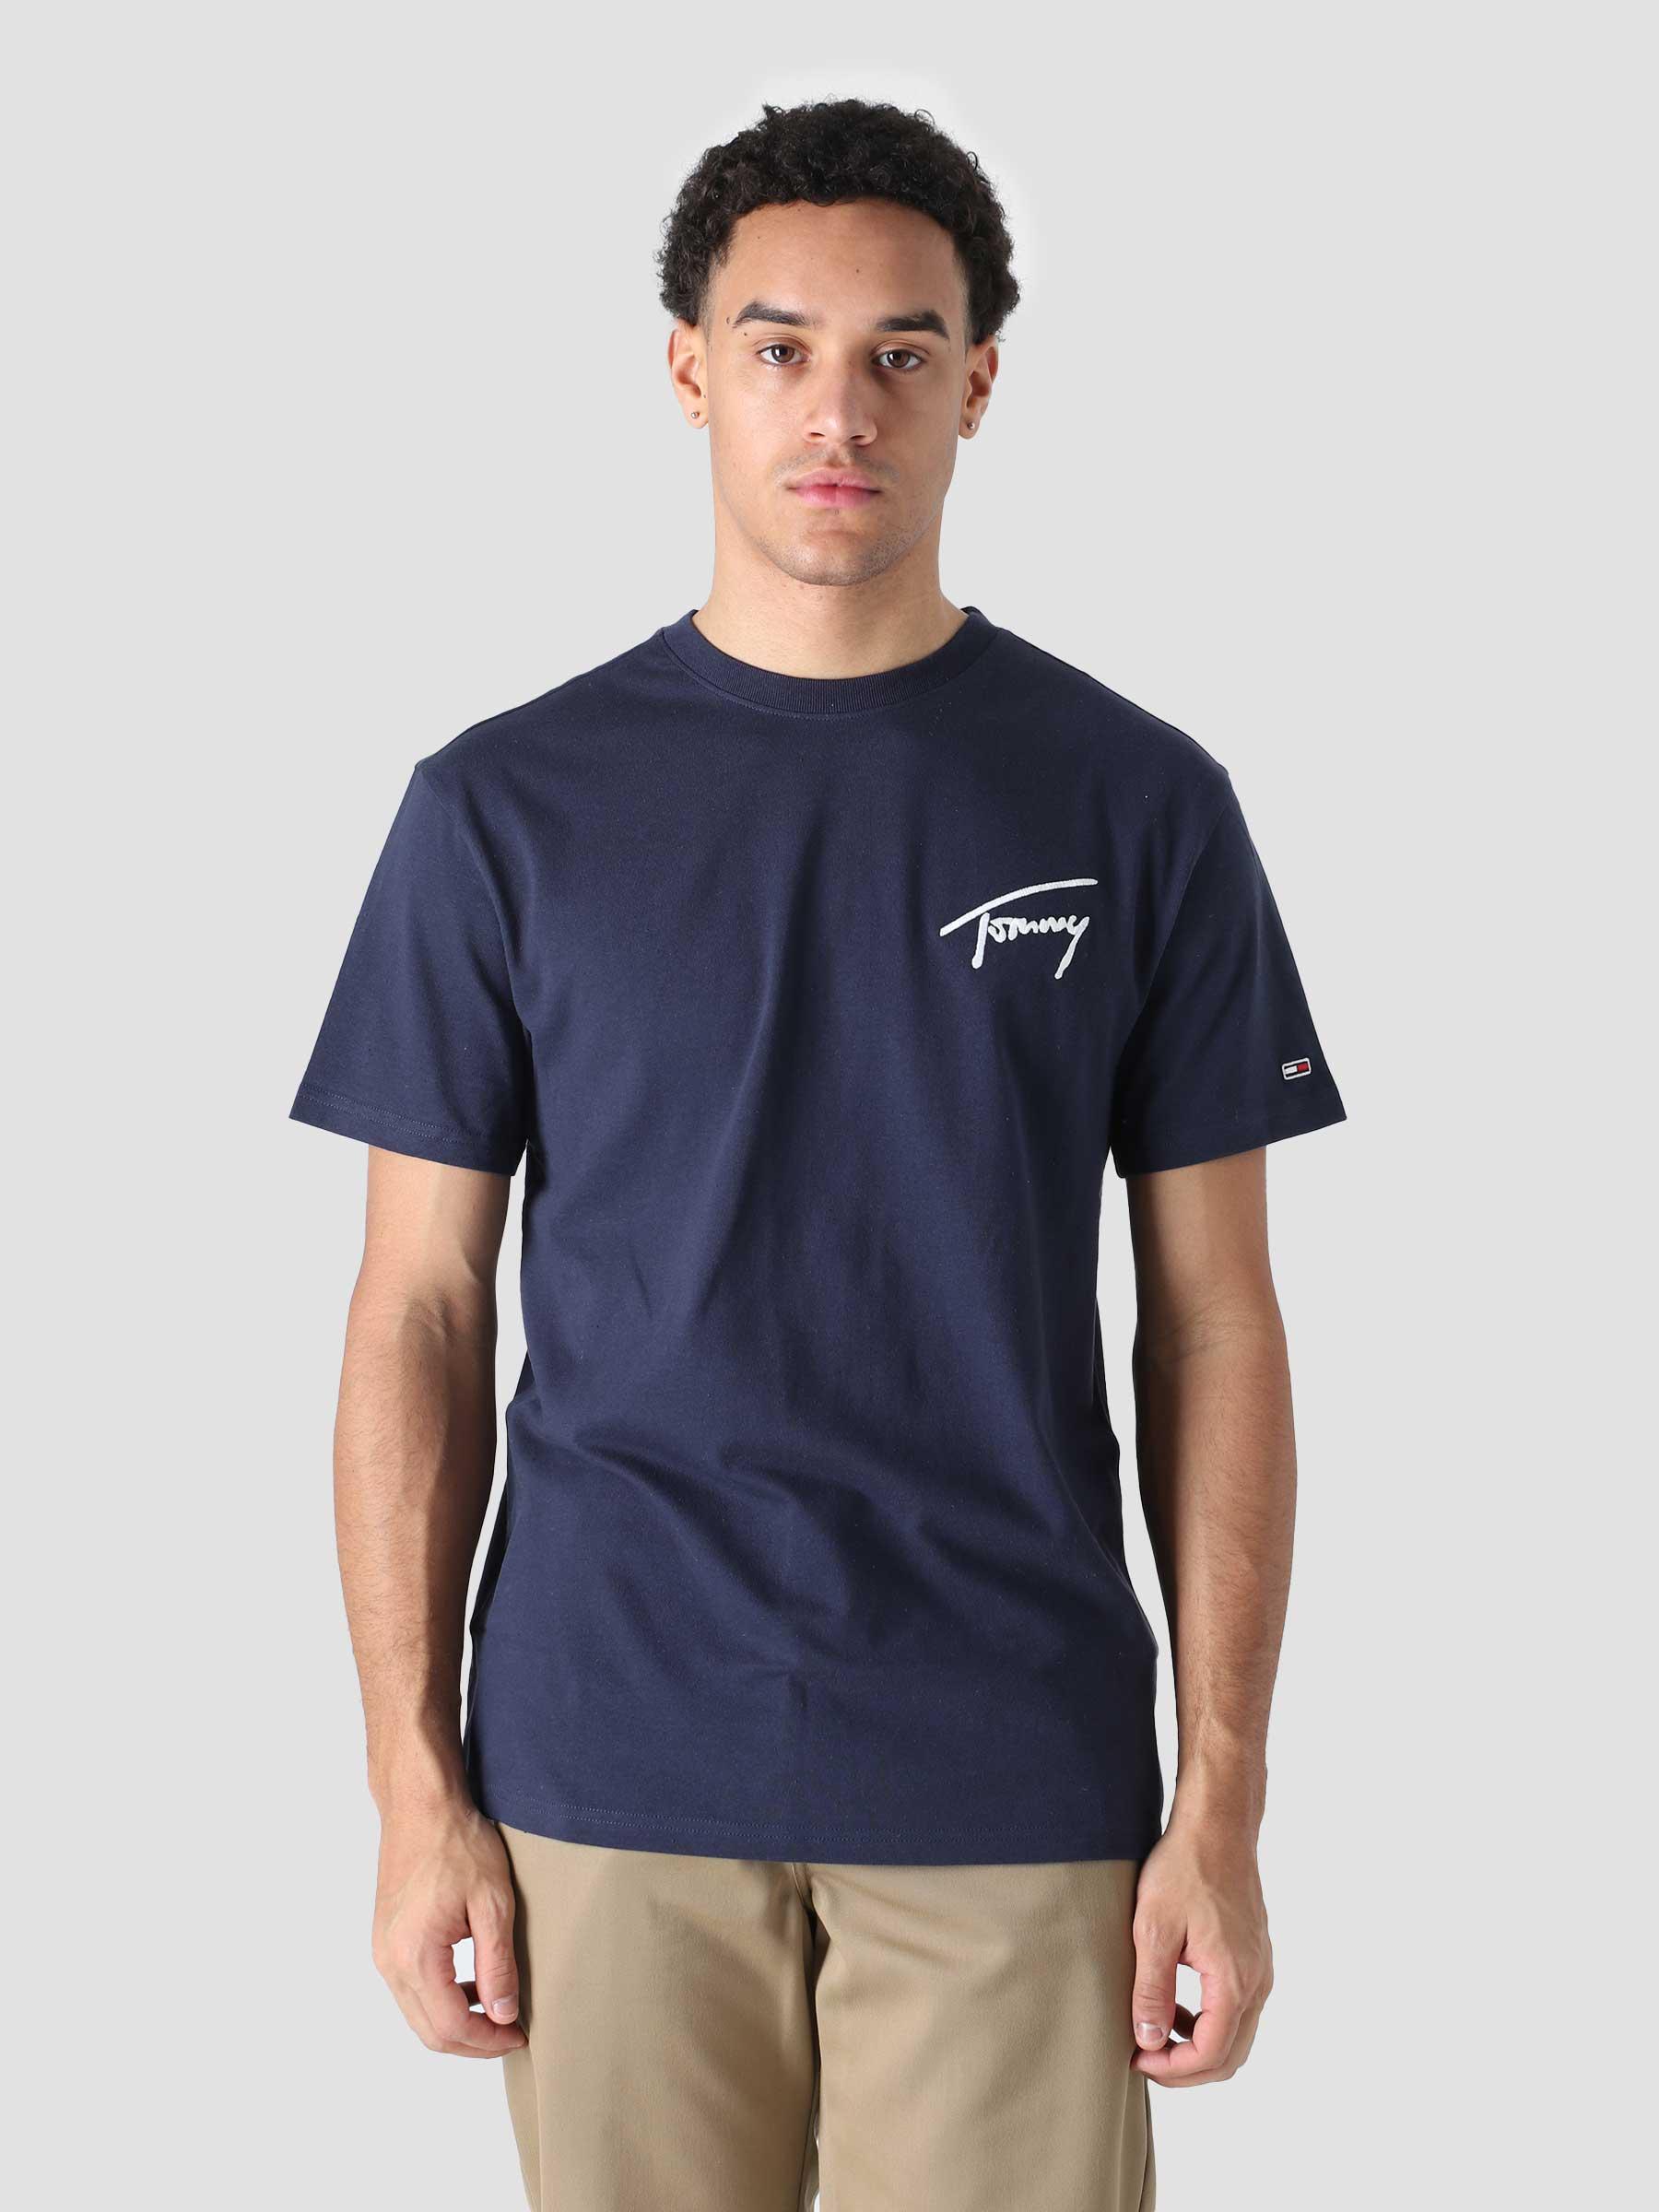 Tommy Jeans TJM Tommy Signature T-Shirt Twilight Navy - Freshcotton